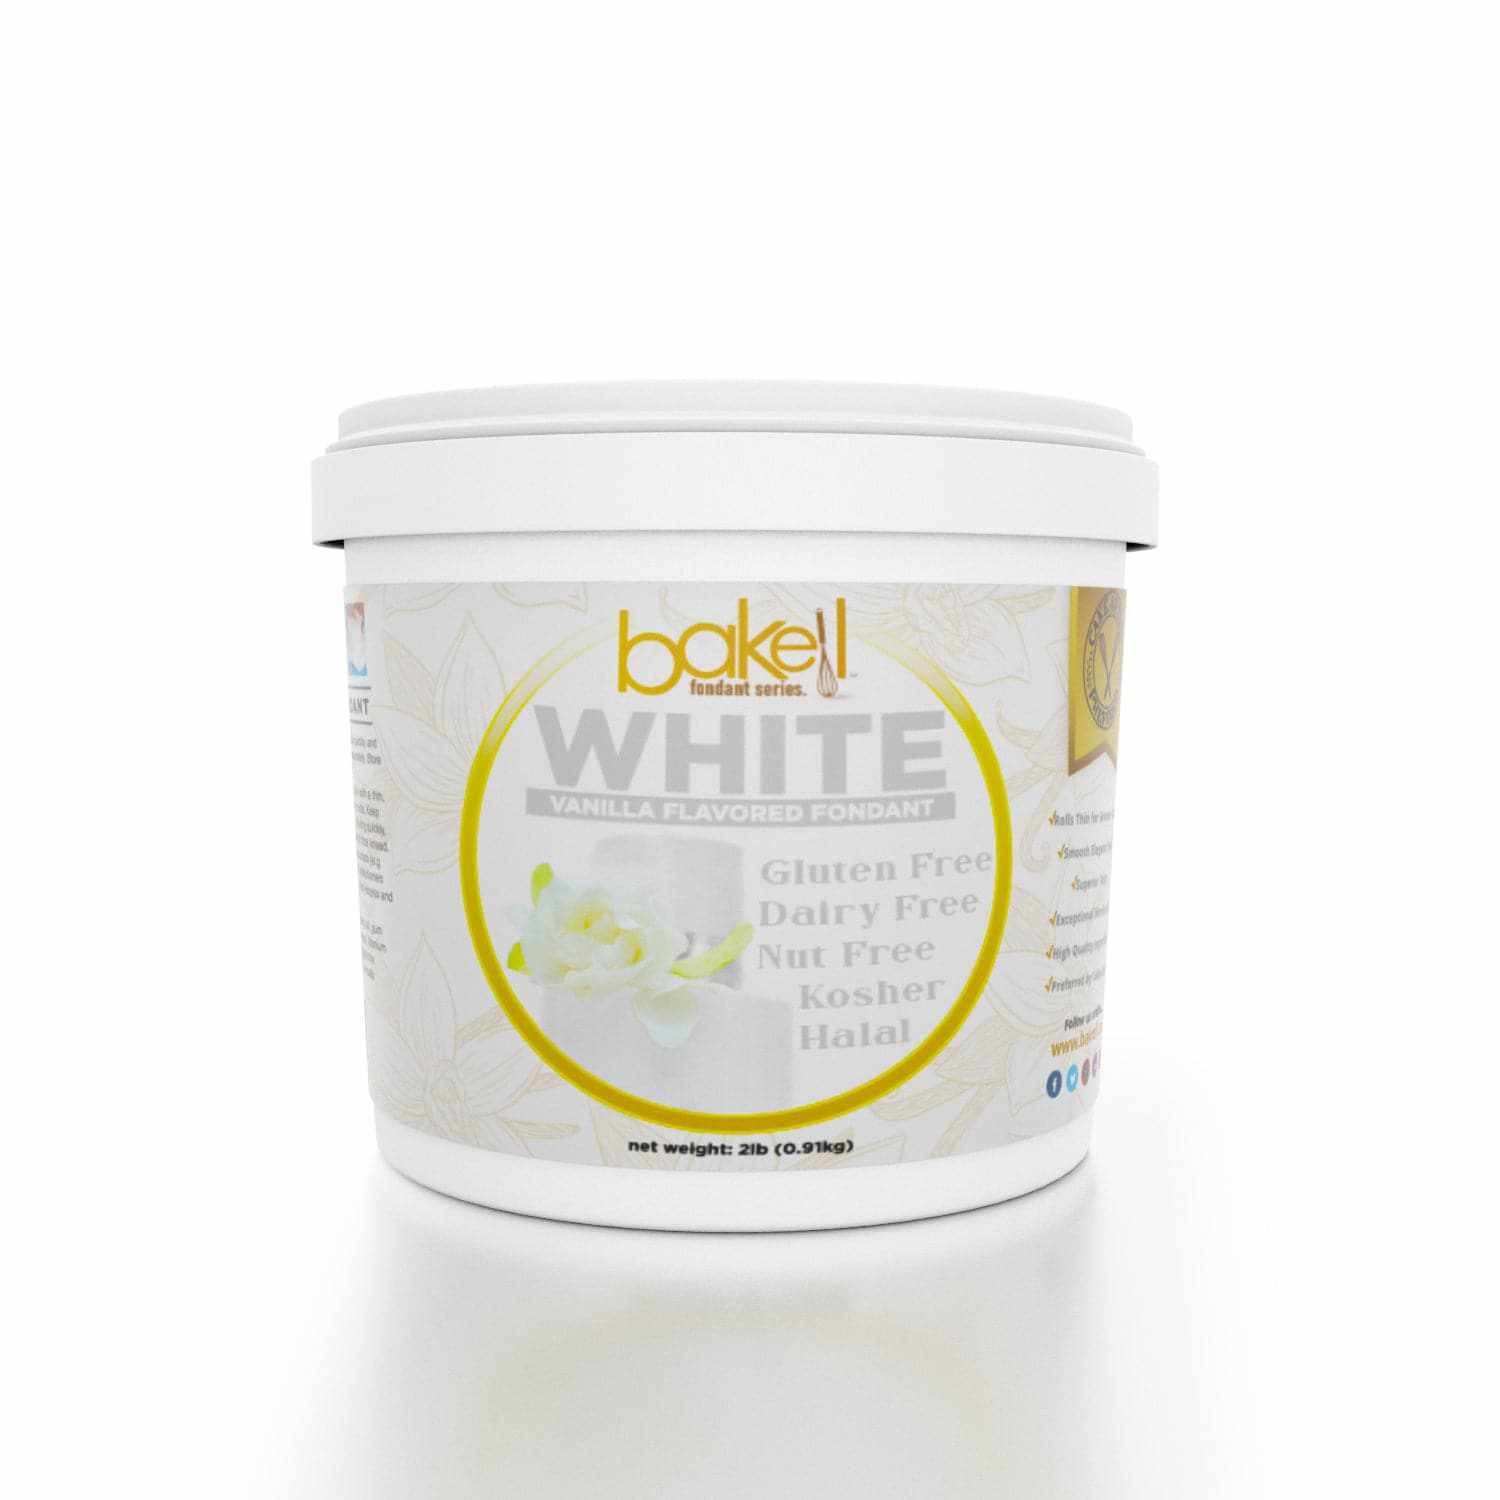 Buy White Vanilla Fondant 4oz - Lots of Flavor - Bakell